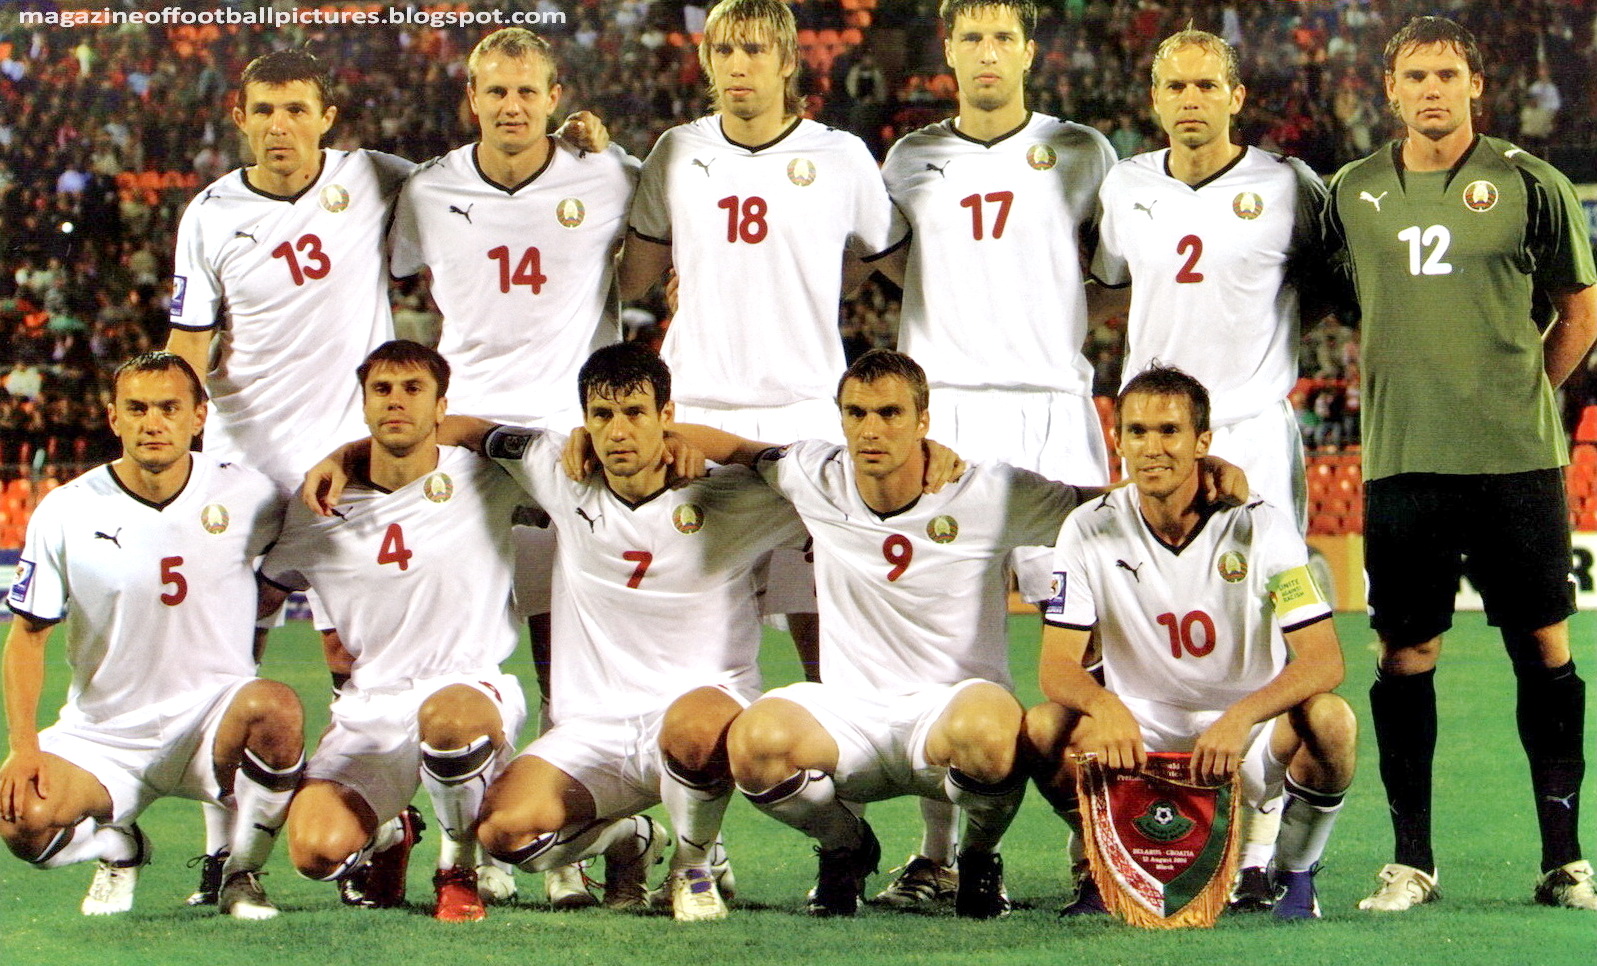 Selección de fútbol de bielorrusia